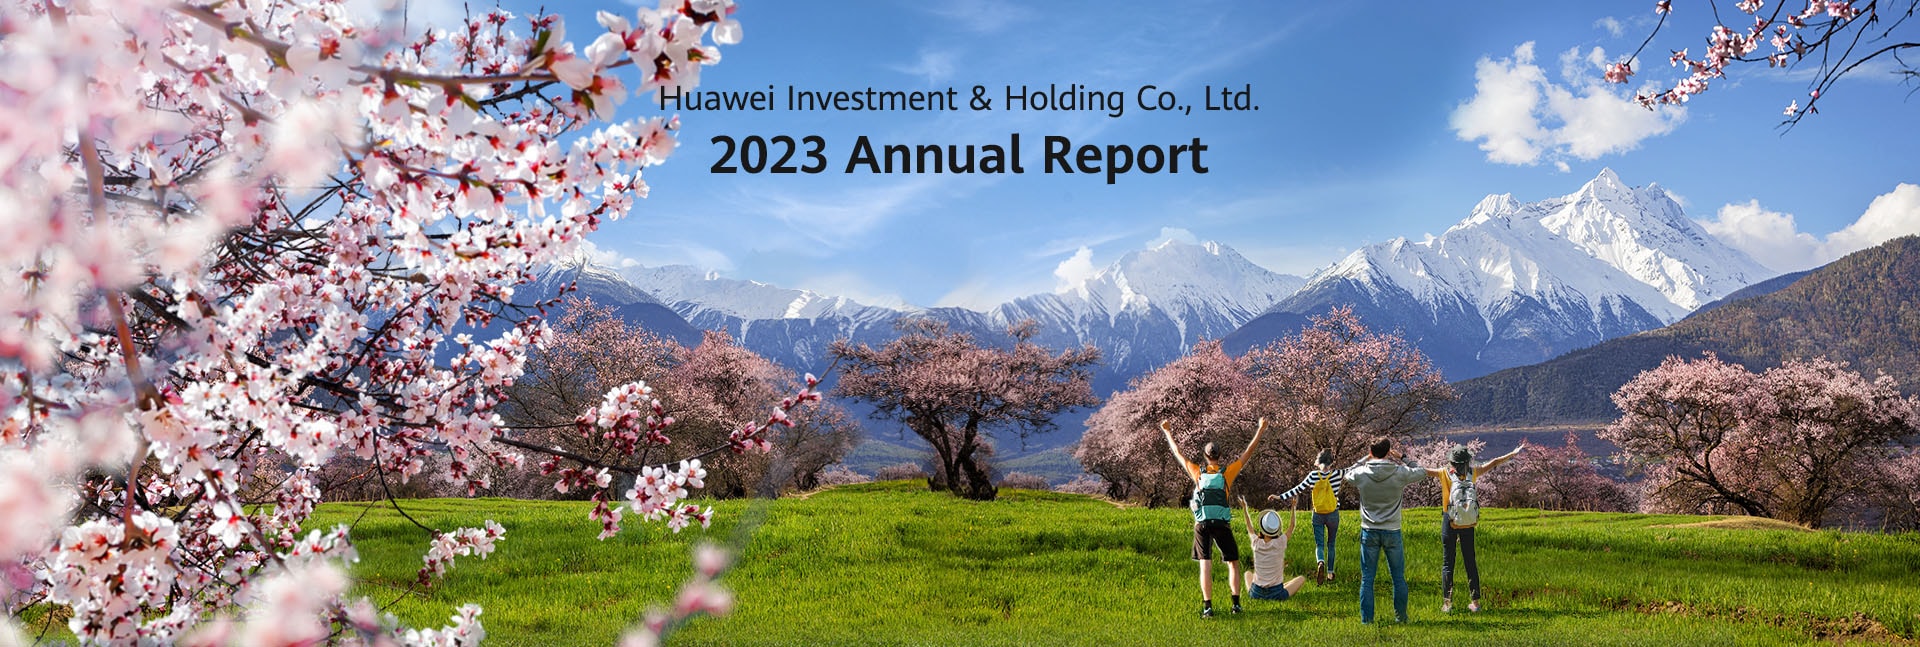 annual report 2023 en pc 2